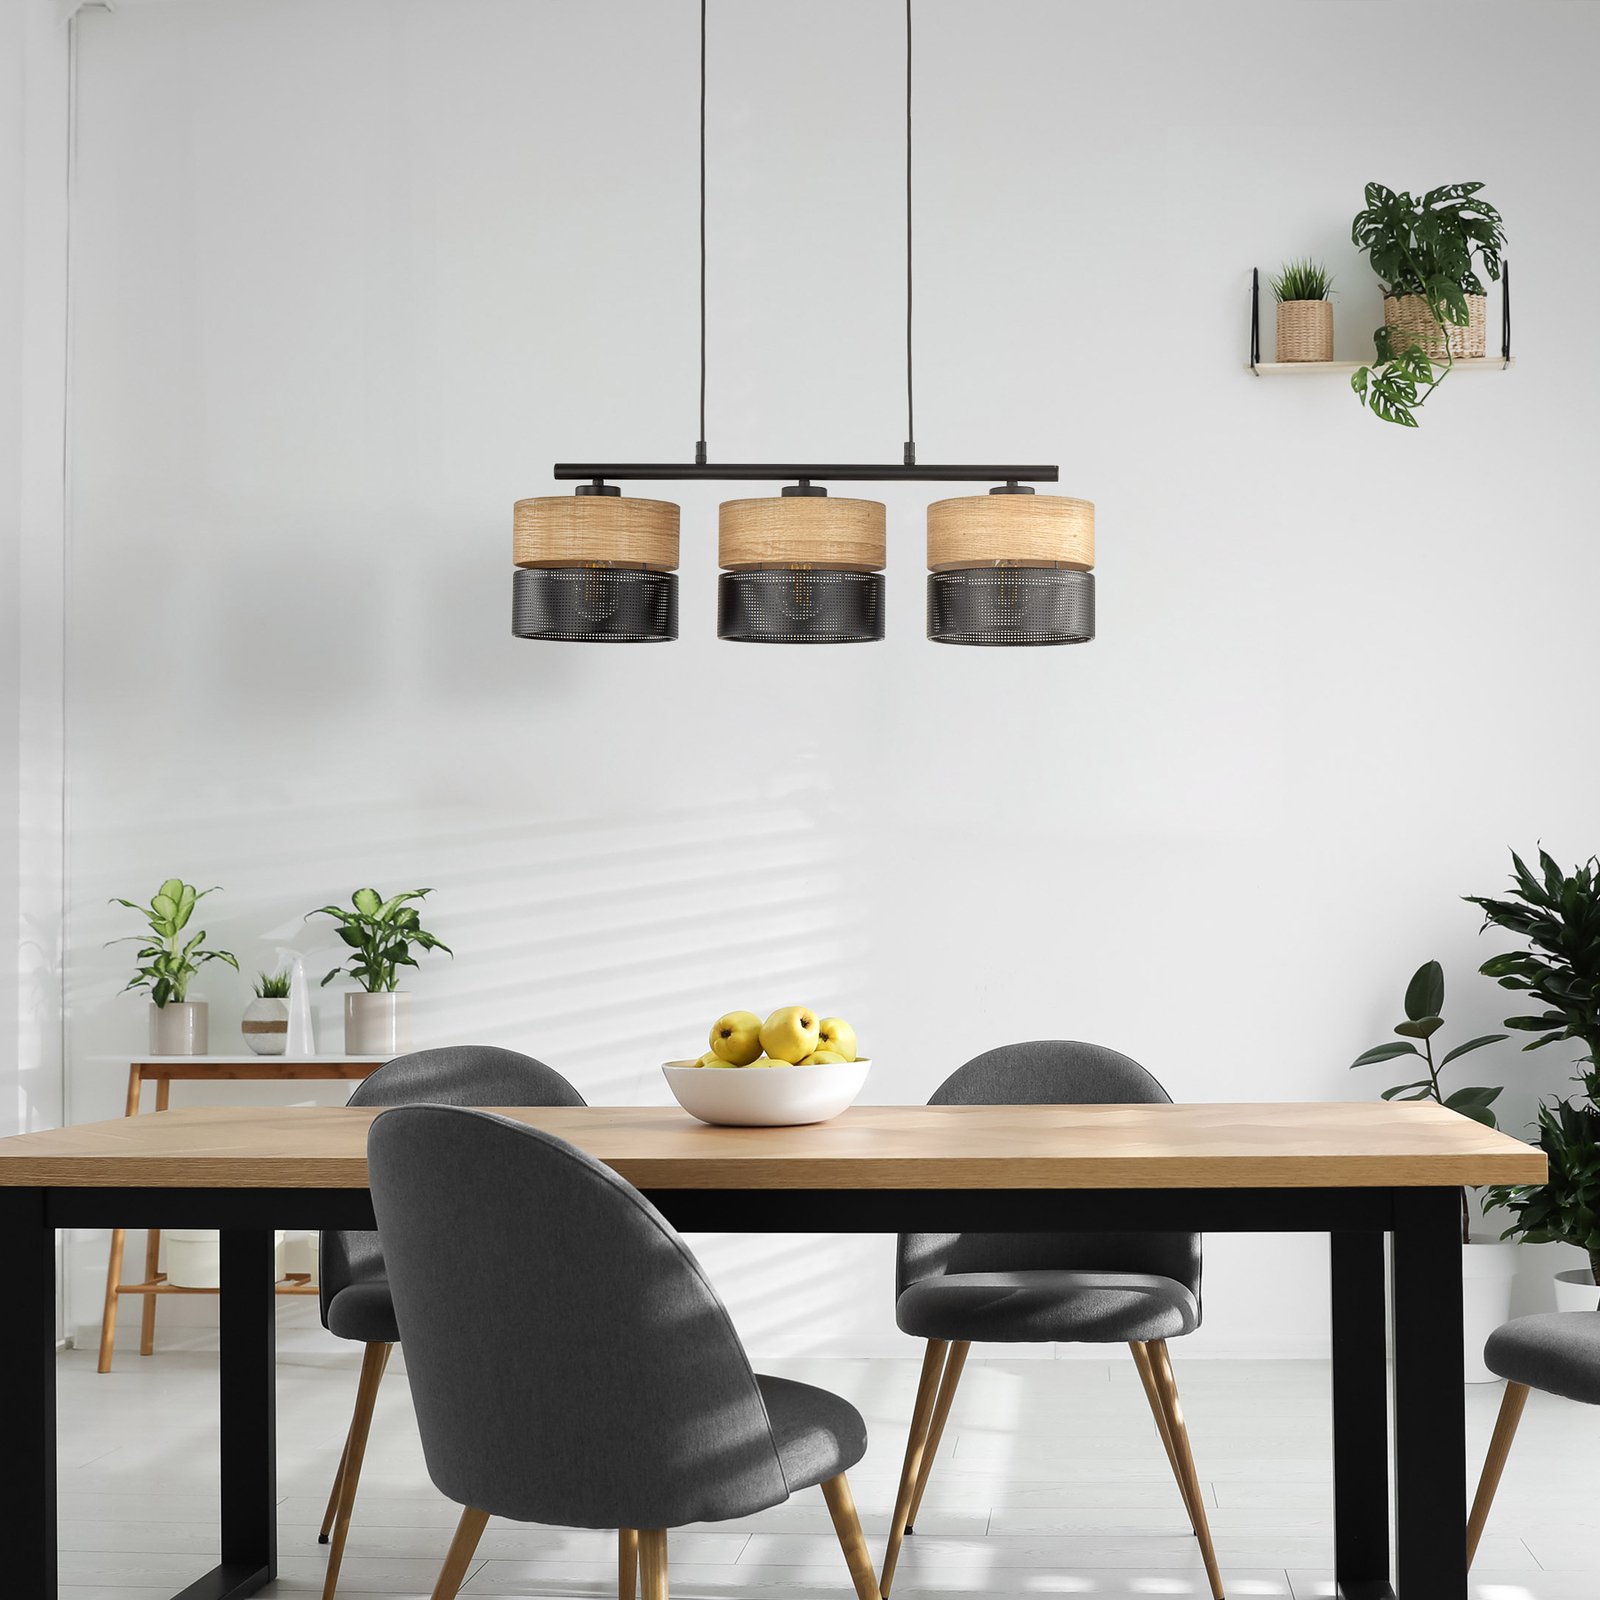 Nicol hanging light, black/wood-effect, 70x20 cm 3-bulb, 3 x E27